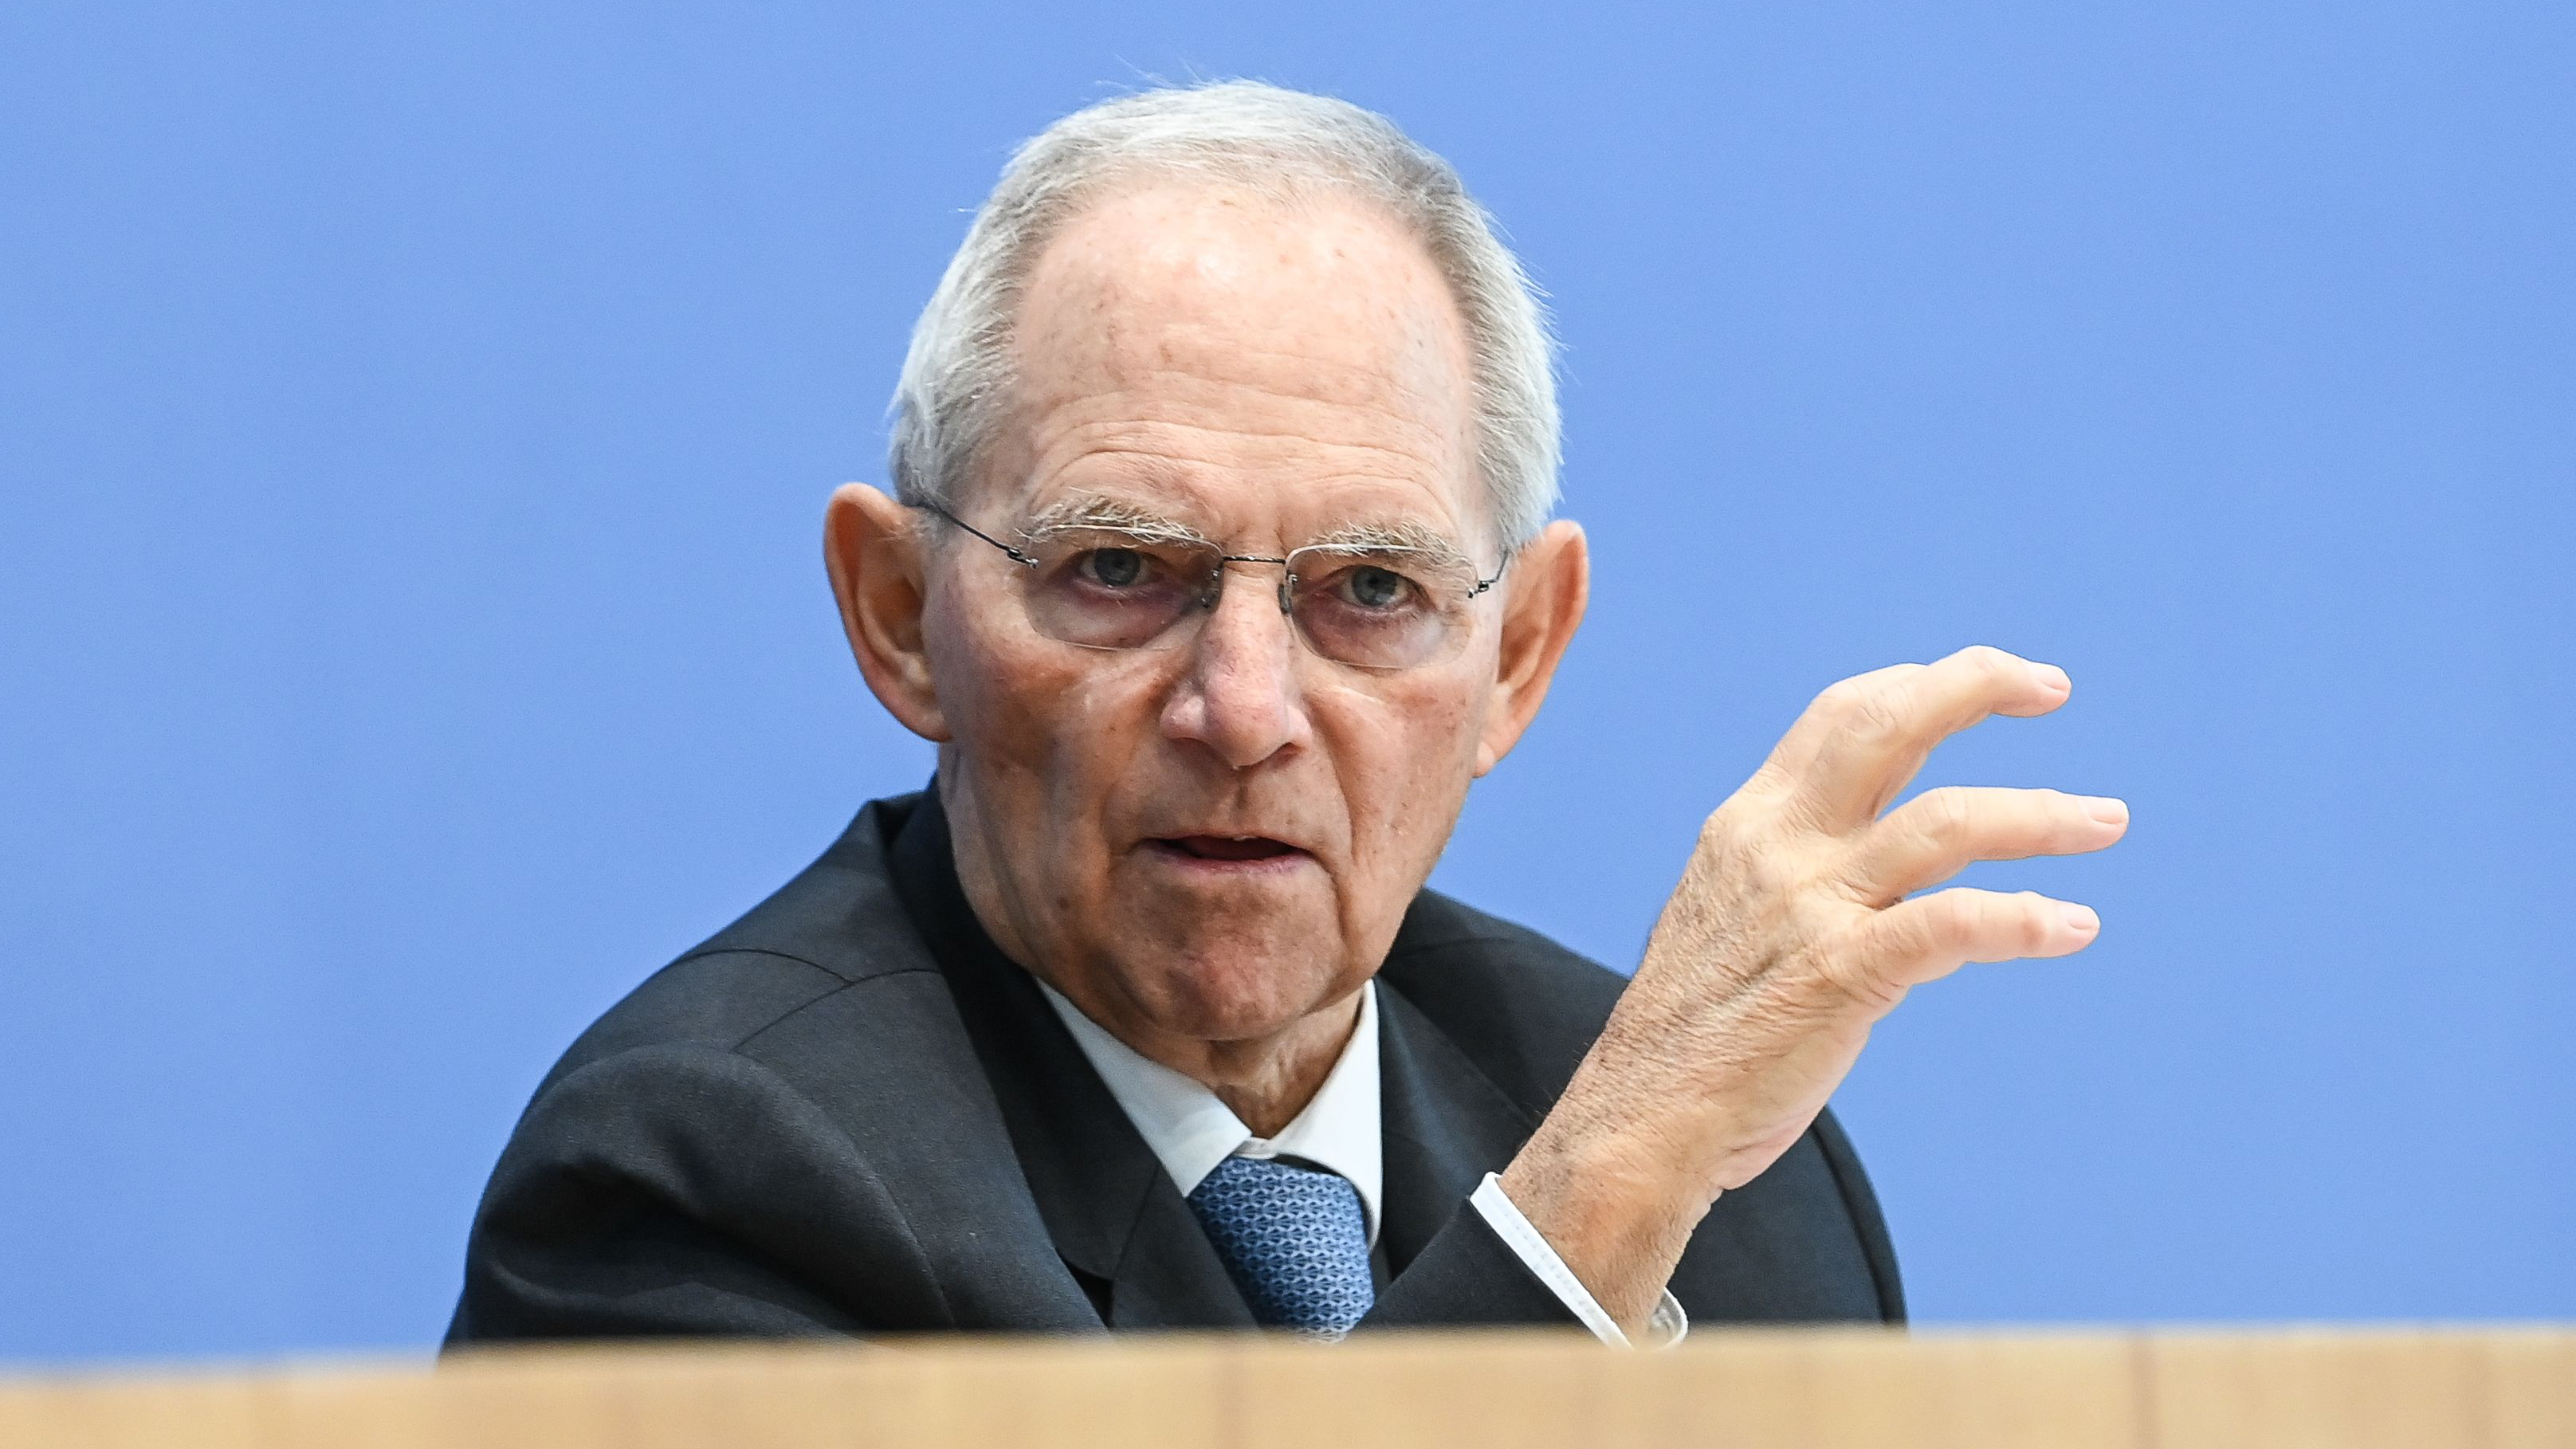 Bundestagspräsident Wolfgang Schäuble | FILIP SINGER/EPA-EFE/Shutterstoc